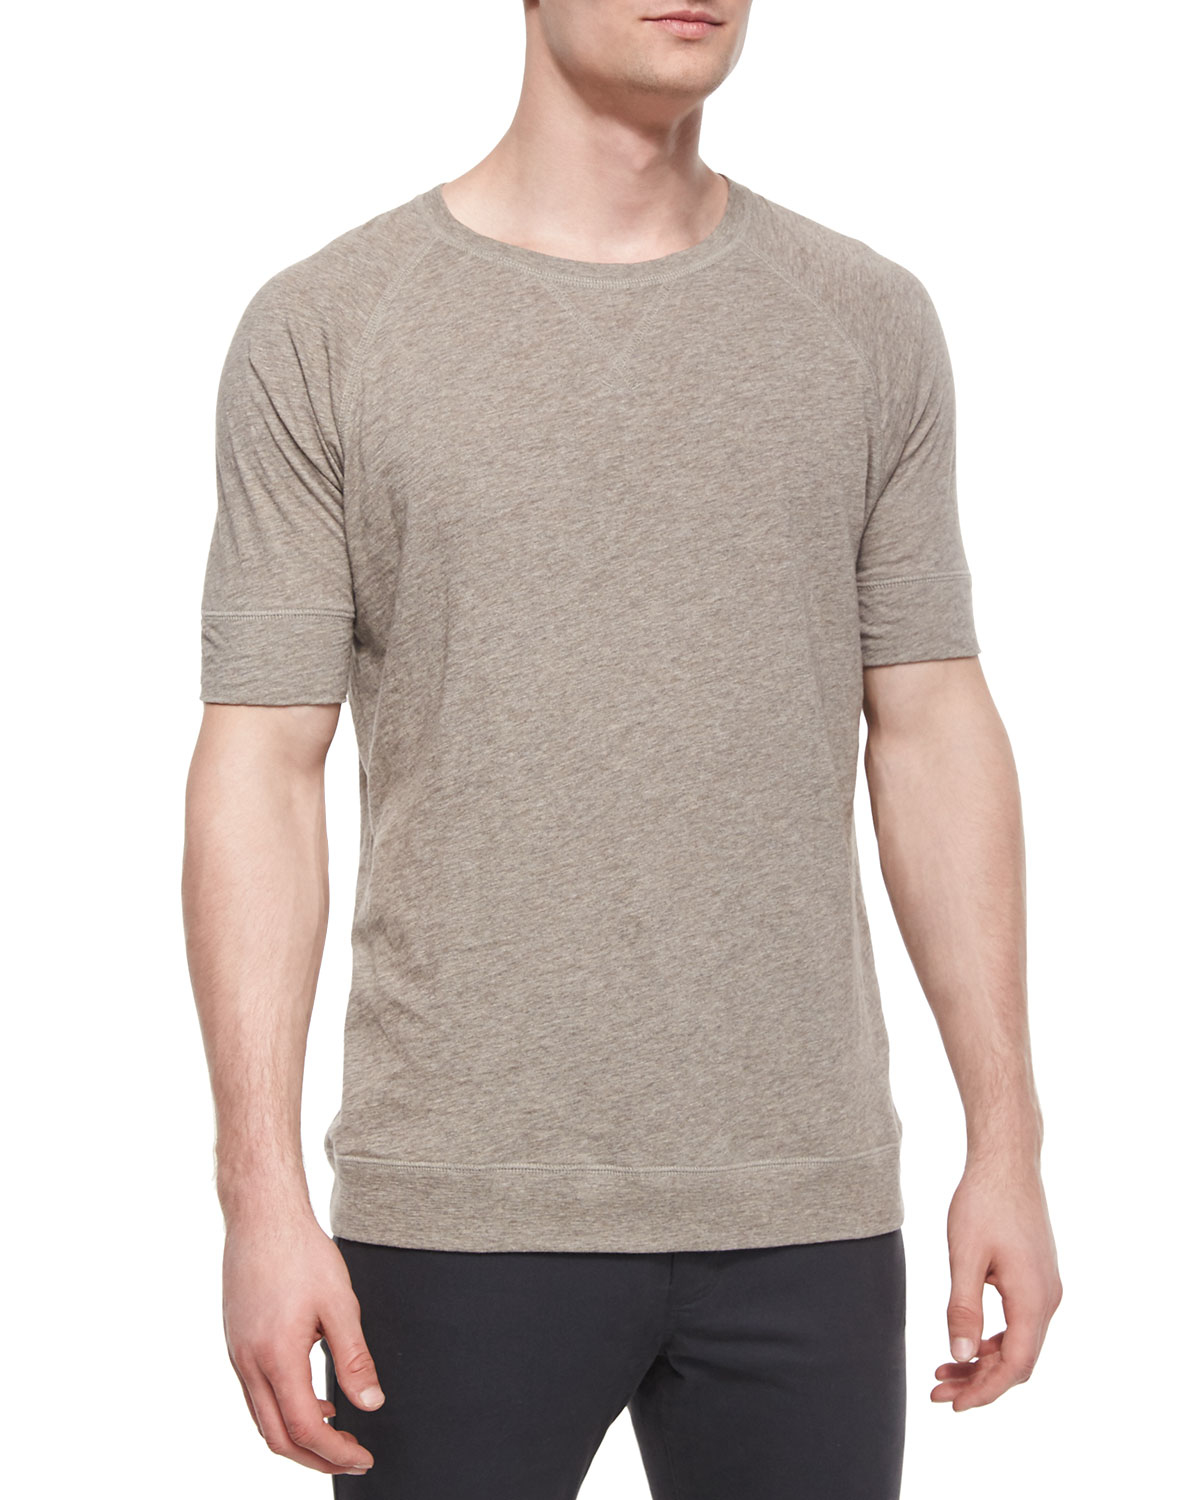 Lyst - Vince Slub-Knit Cotton T-Shirt in Brown for Men